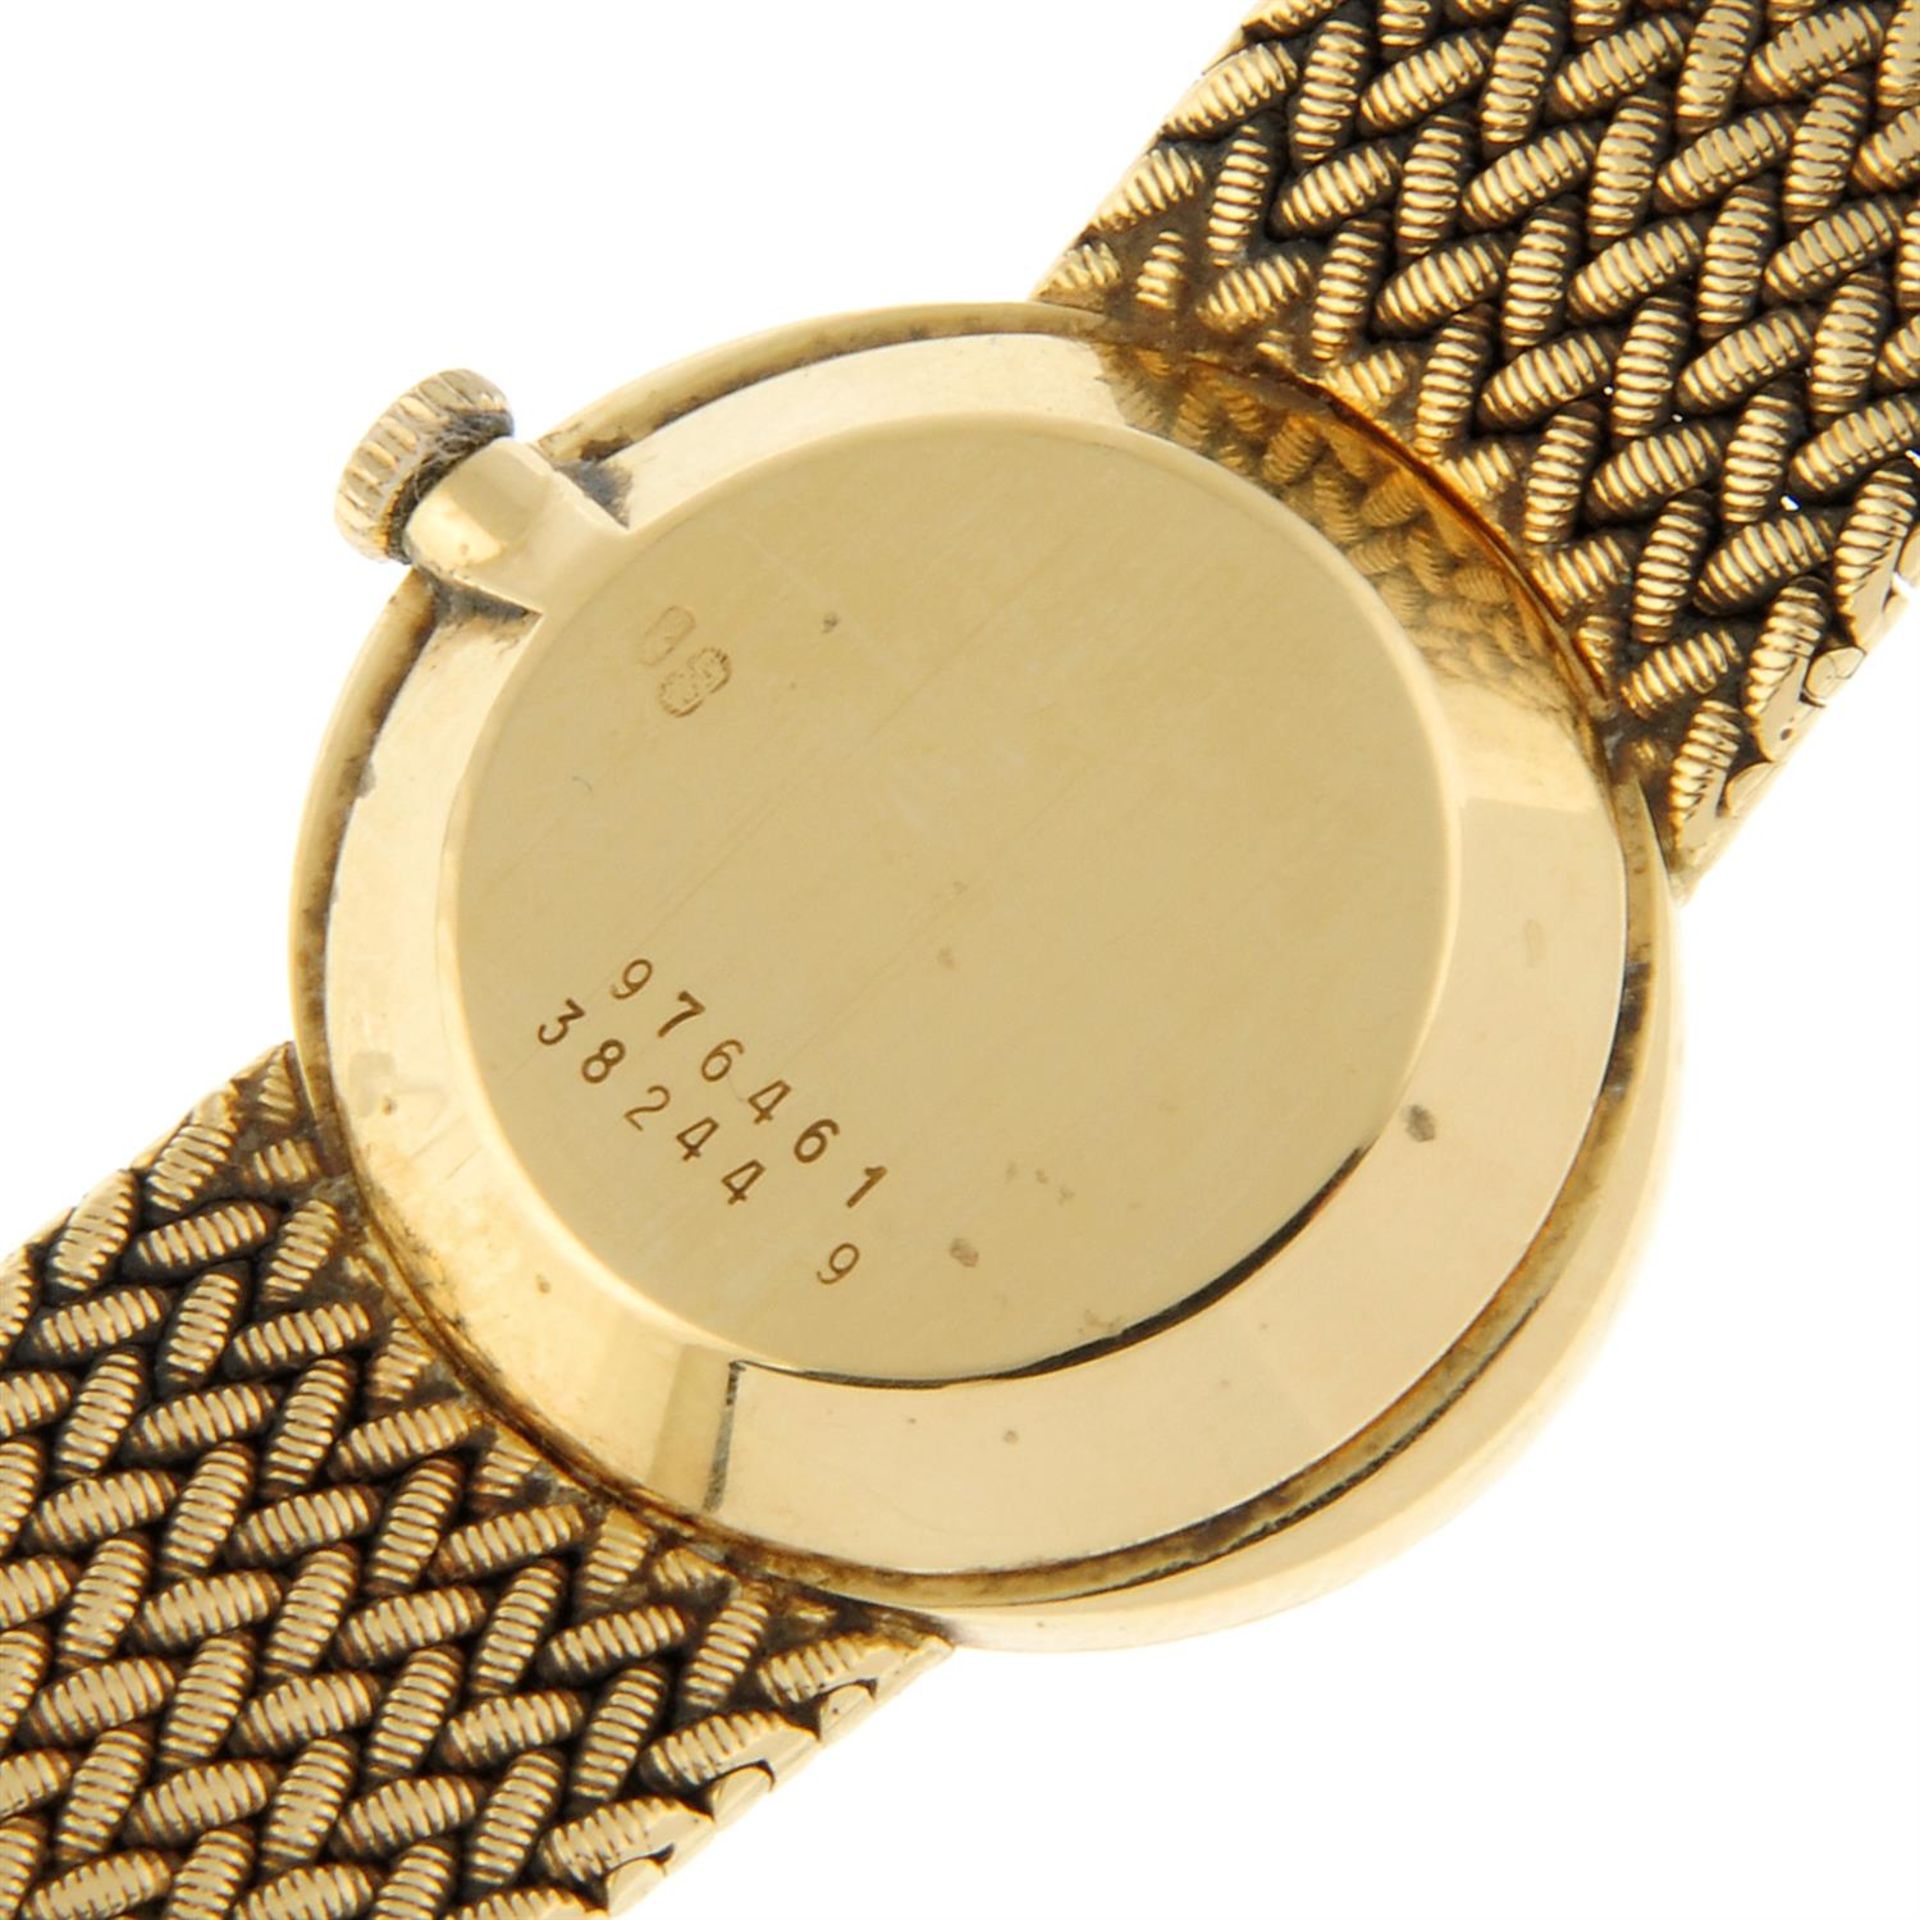 Baume & Mercier - a watch, 24mm. - Image 4 of 6